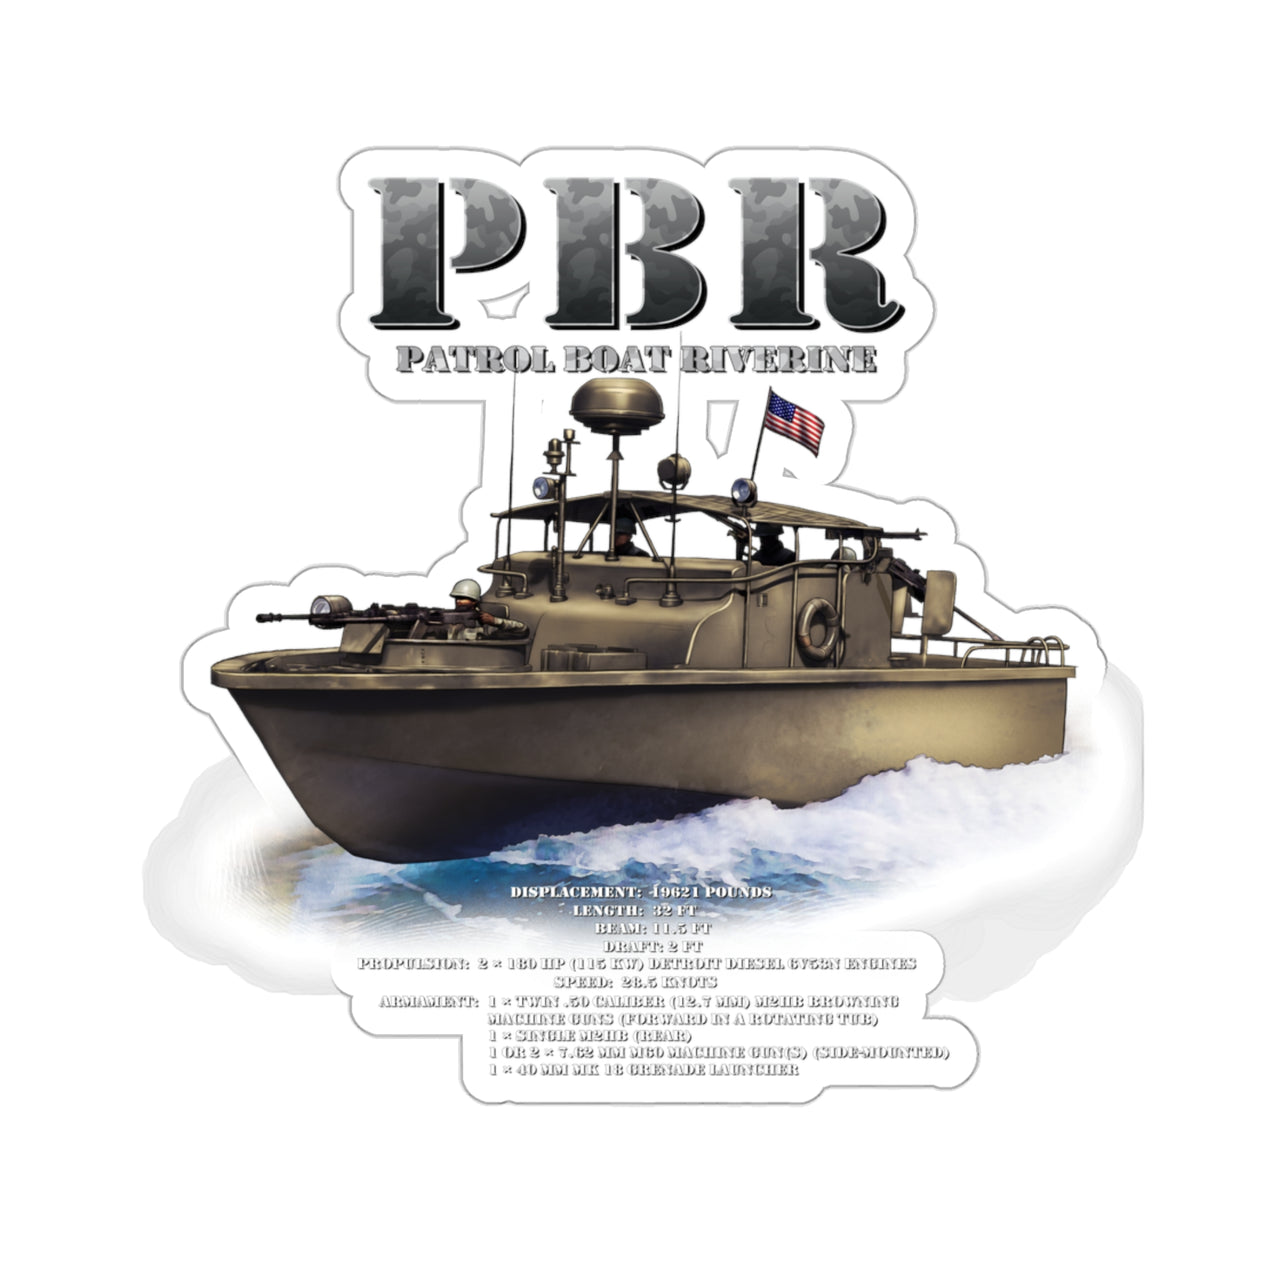 PBR v1 - Patrol Boat River Sticker